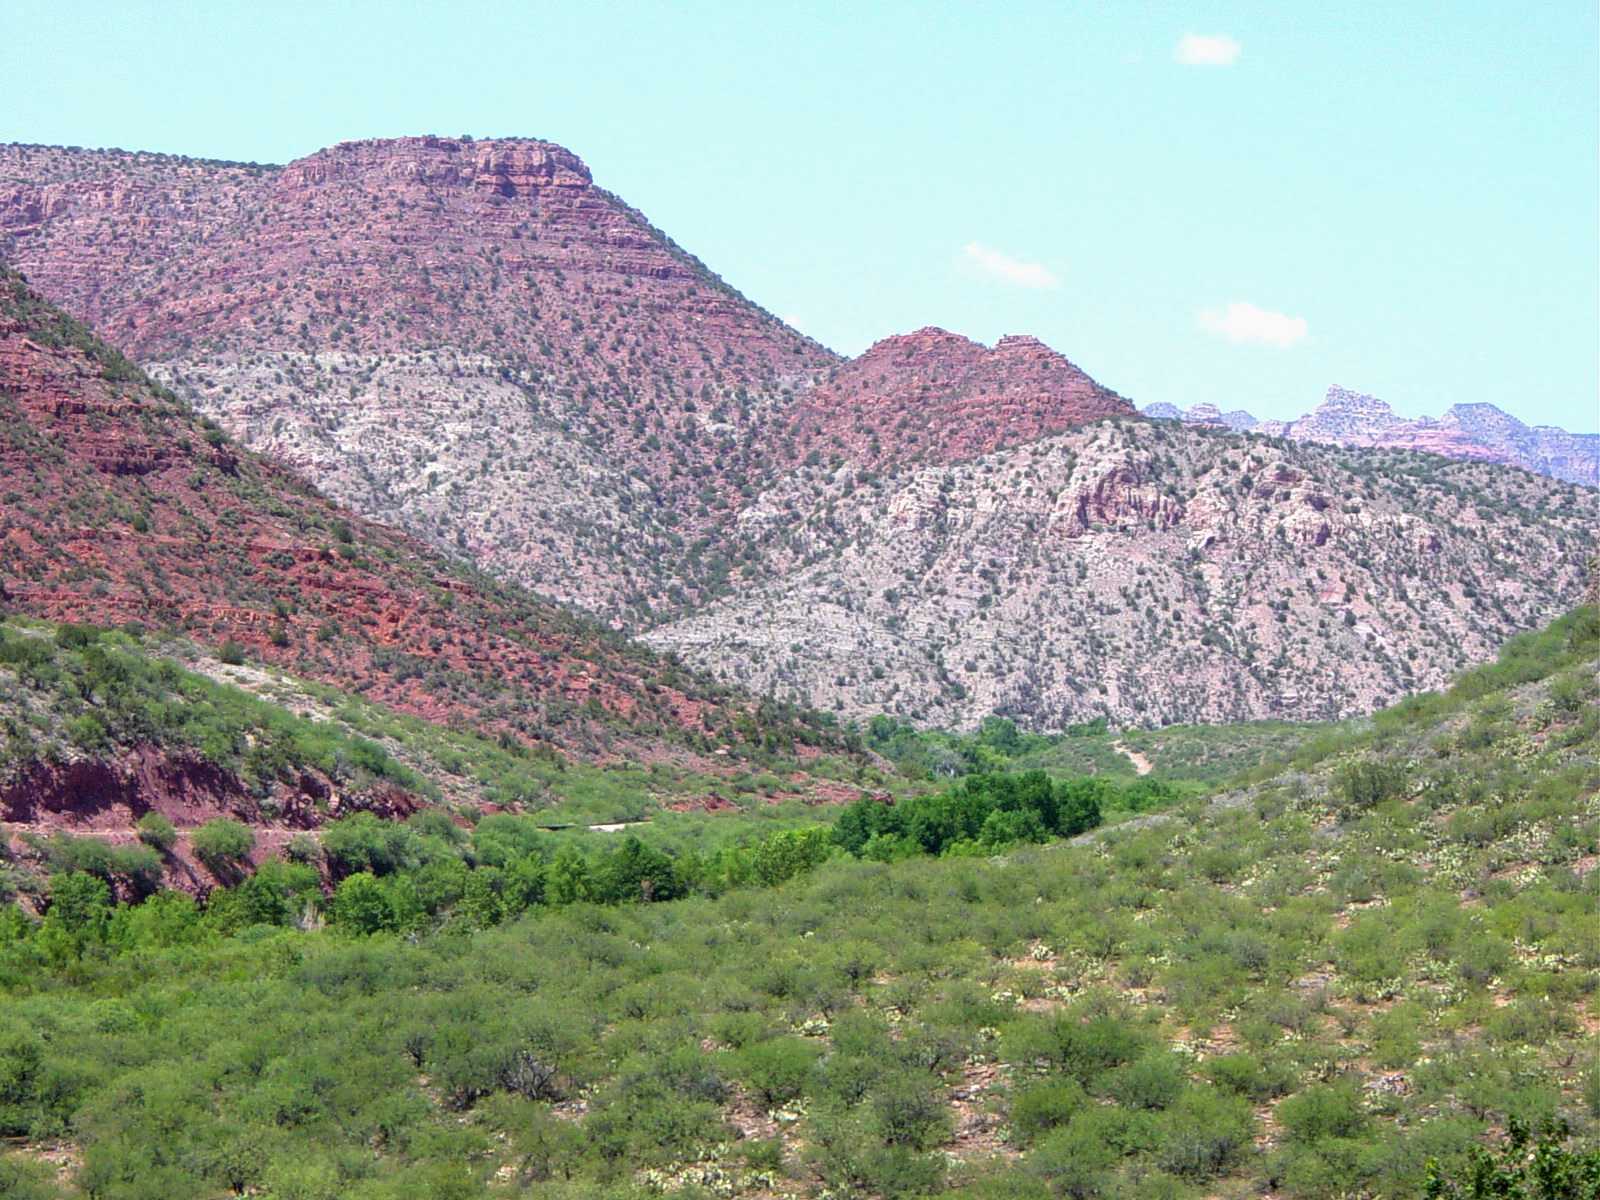 Verde Canyon scenery